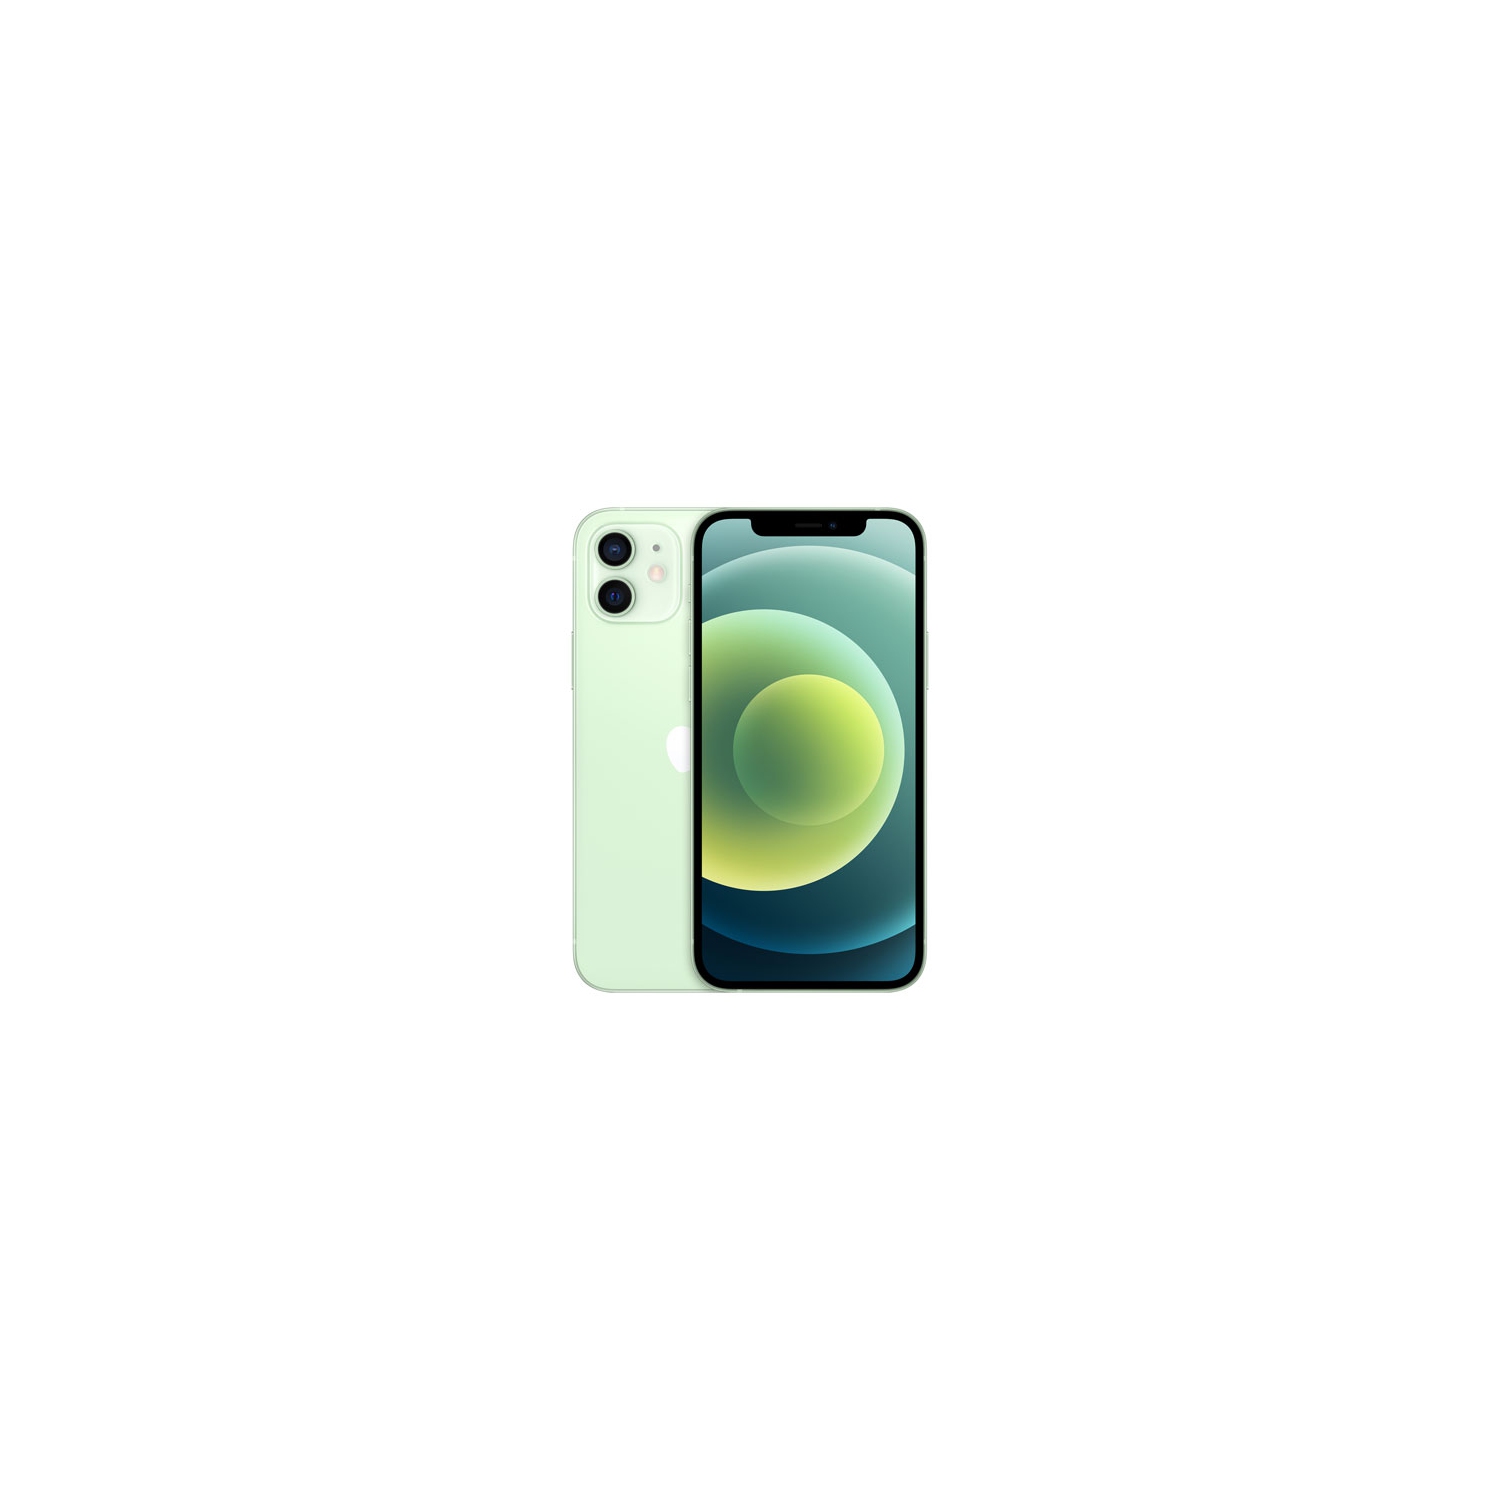 Refurbished (Good) - Apple iPhone 12 128GB Smartphone - Green - Unlocked